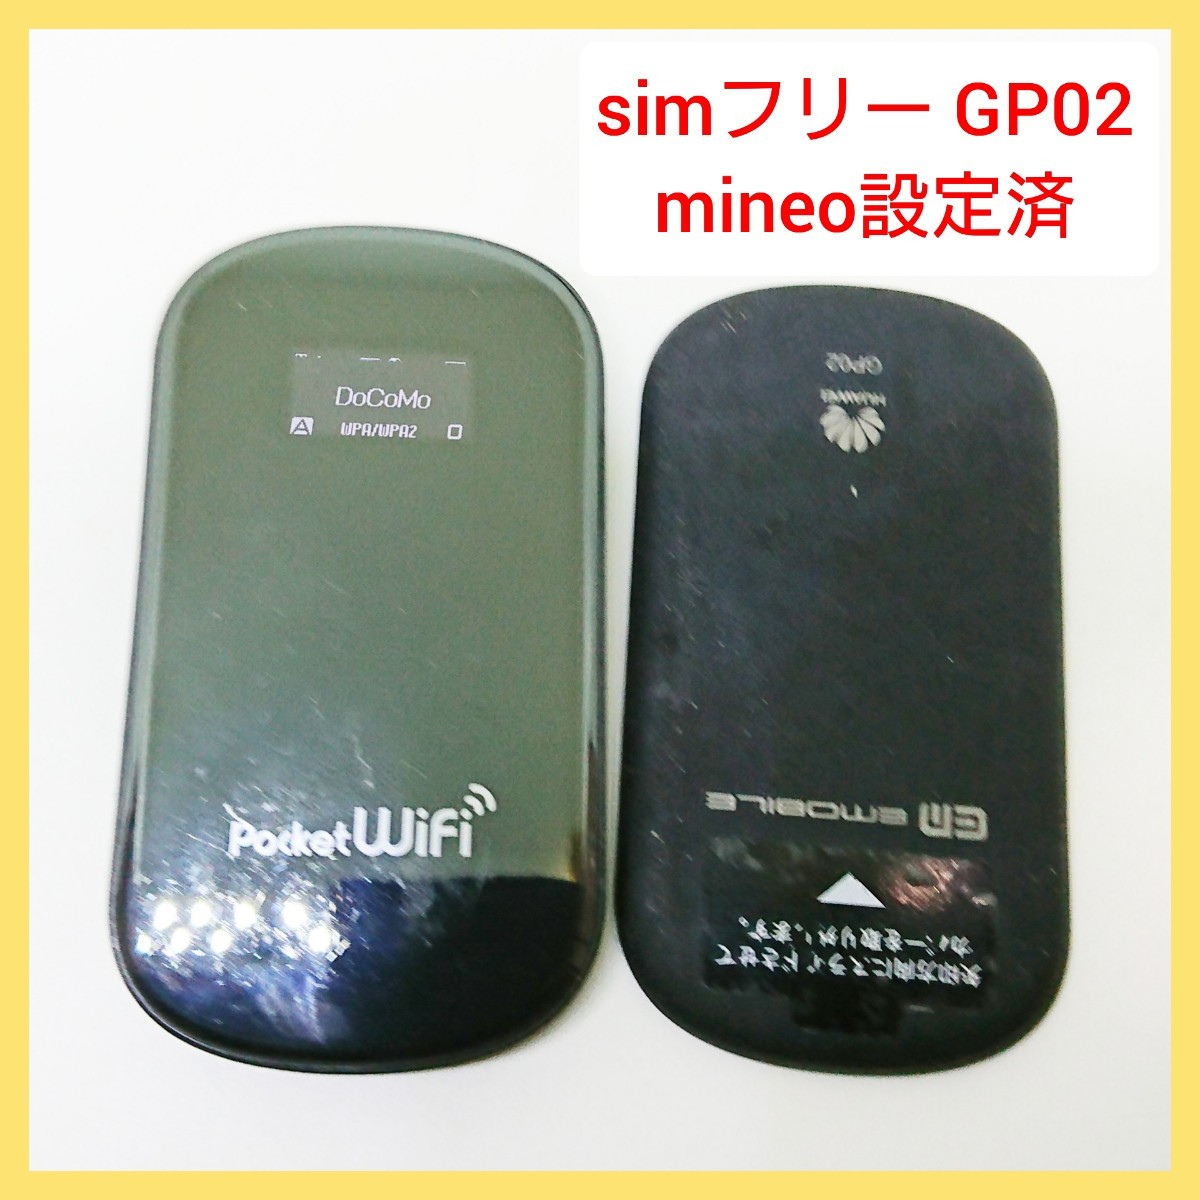 SIMフリー★ルーターGP02電池あり 格安SIM マイネオ設定済